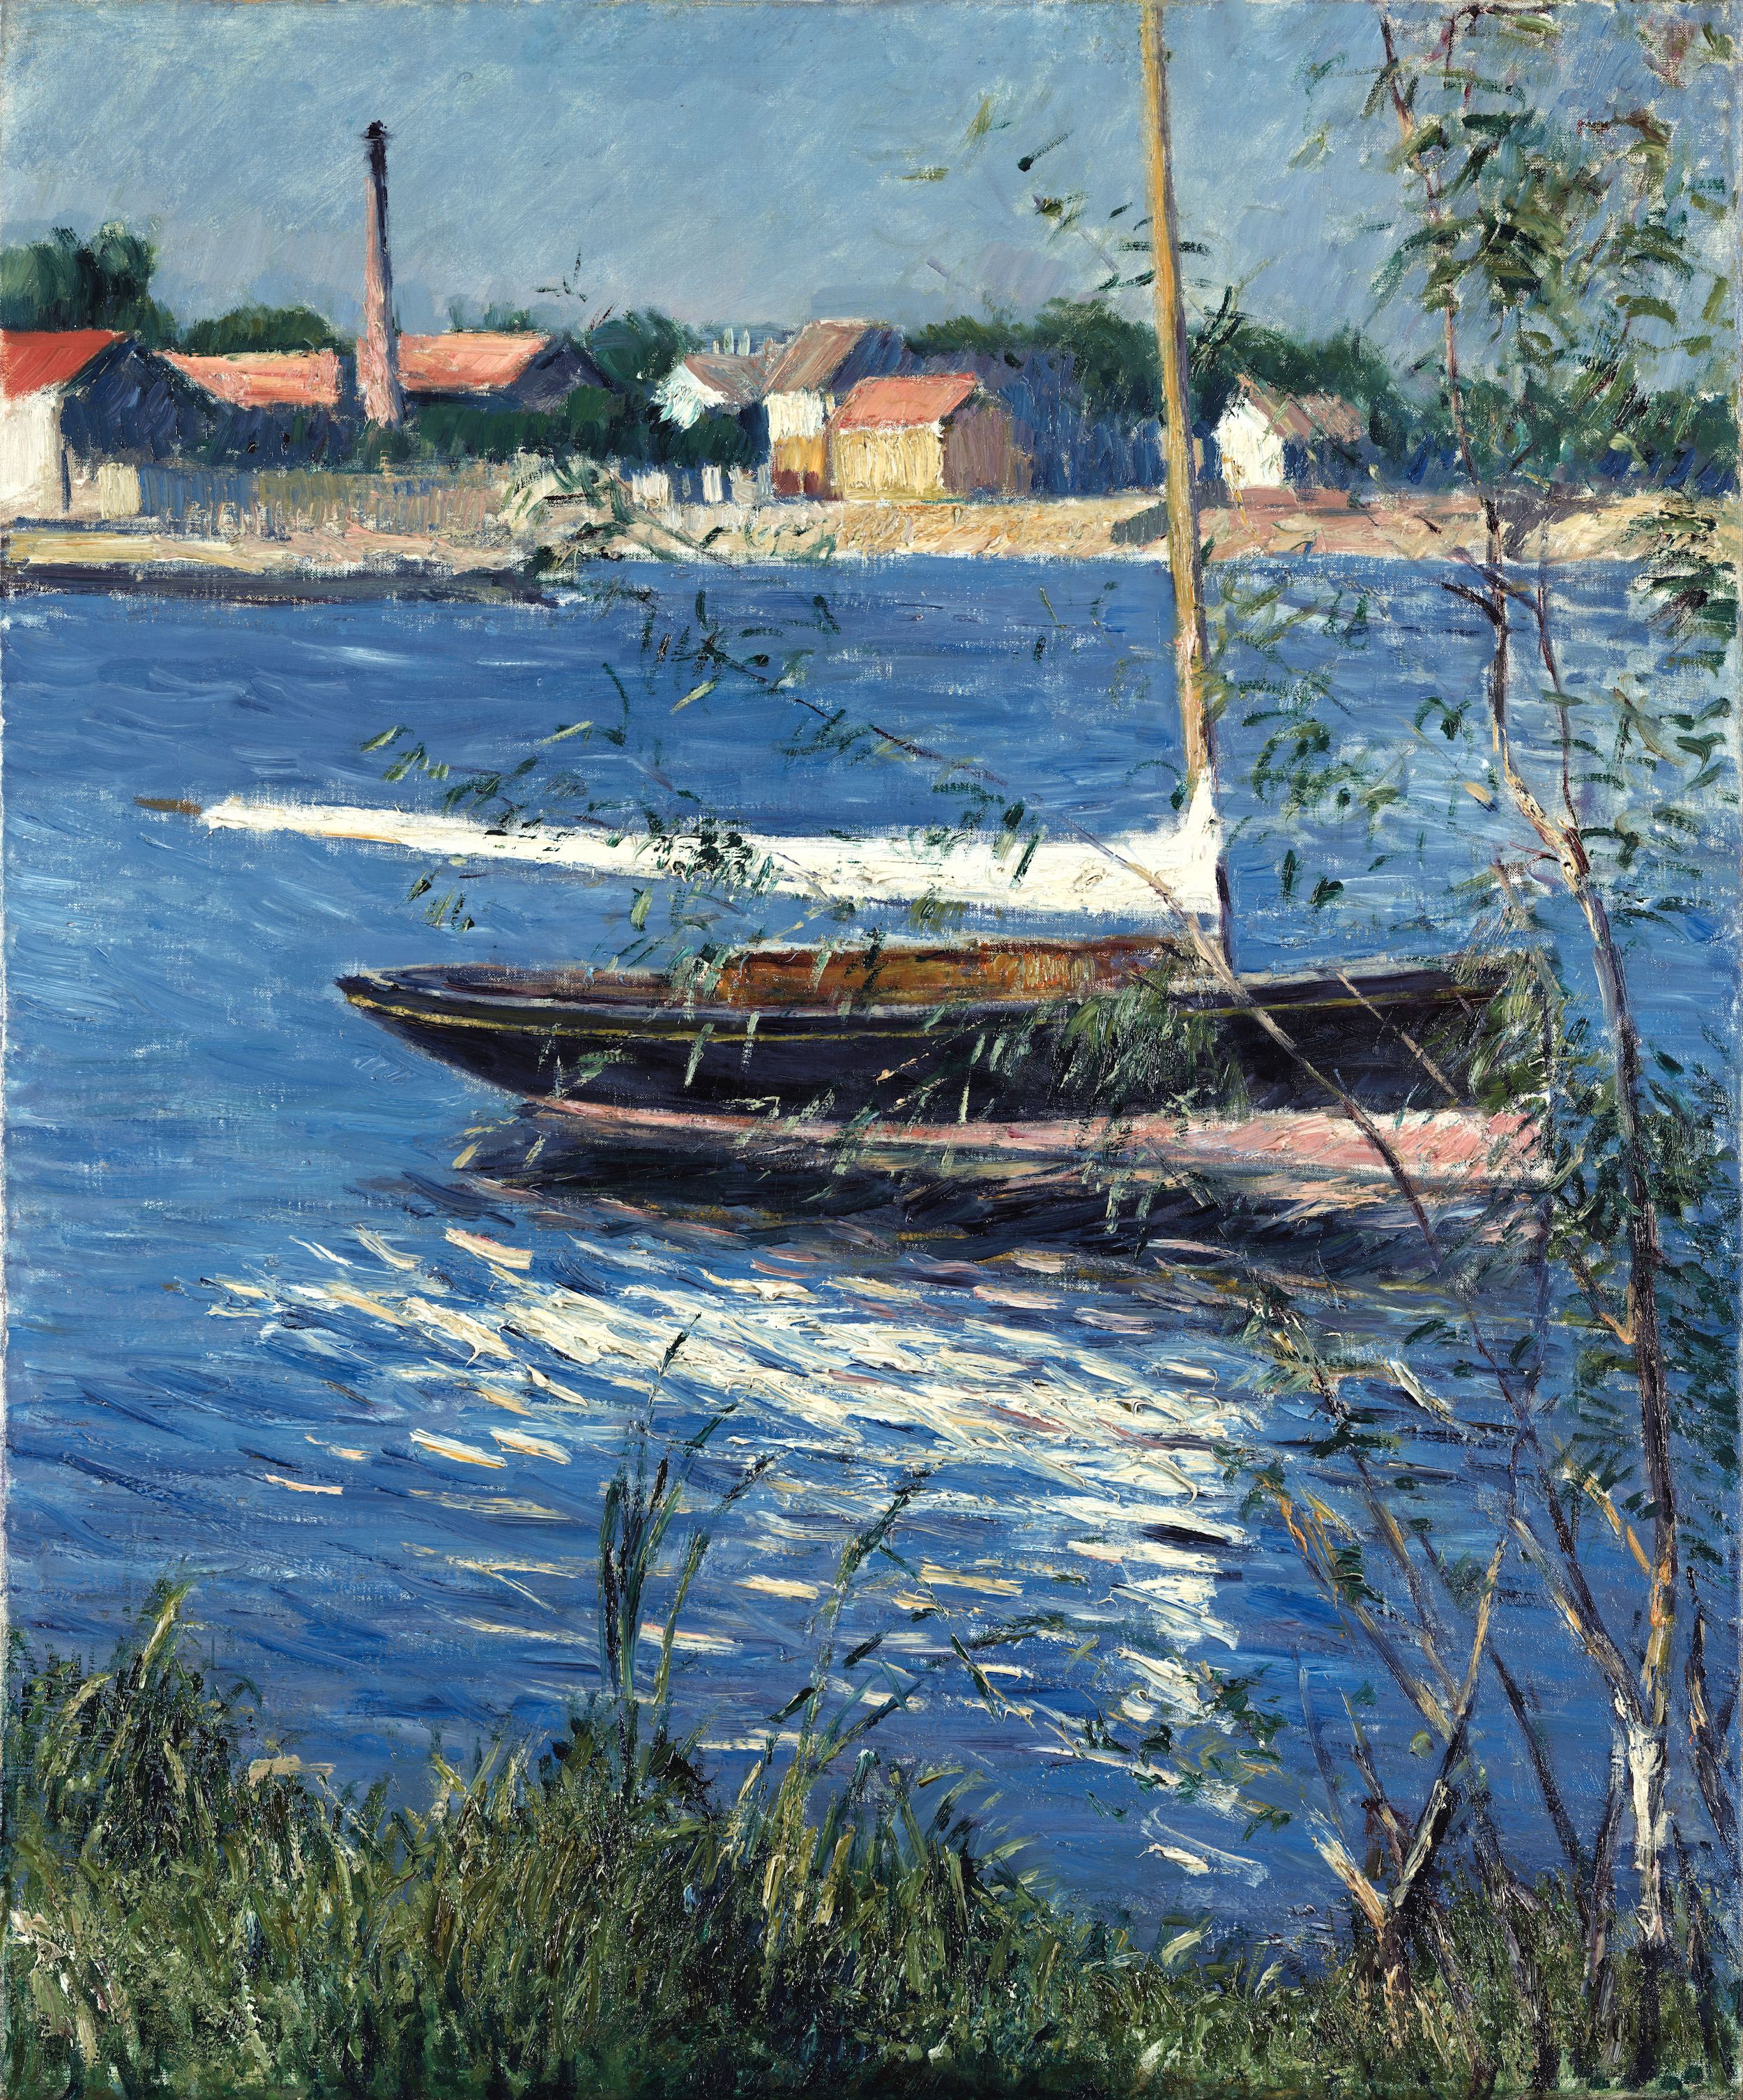 Лодка, пришвартованная на Сене в Аржантёе by Гюстав Кайботт - c. 1884 - 65.41 x 54.29 cm (без рамы) 